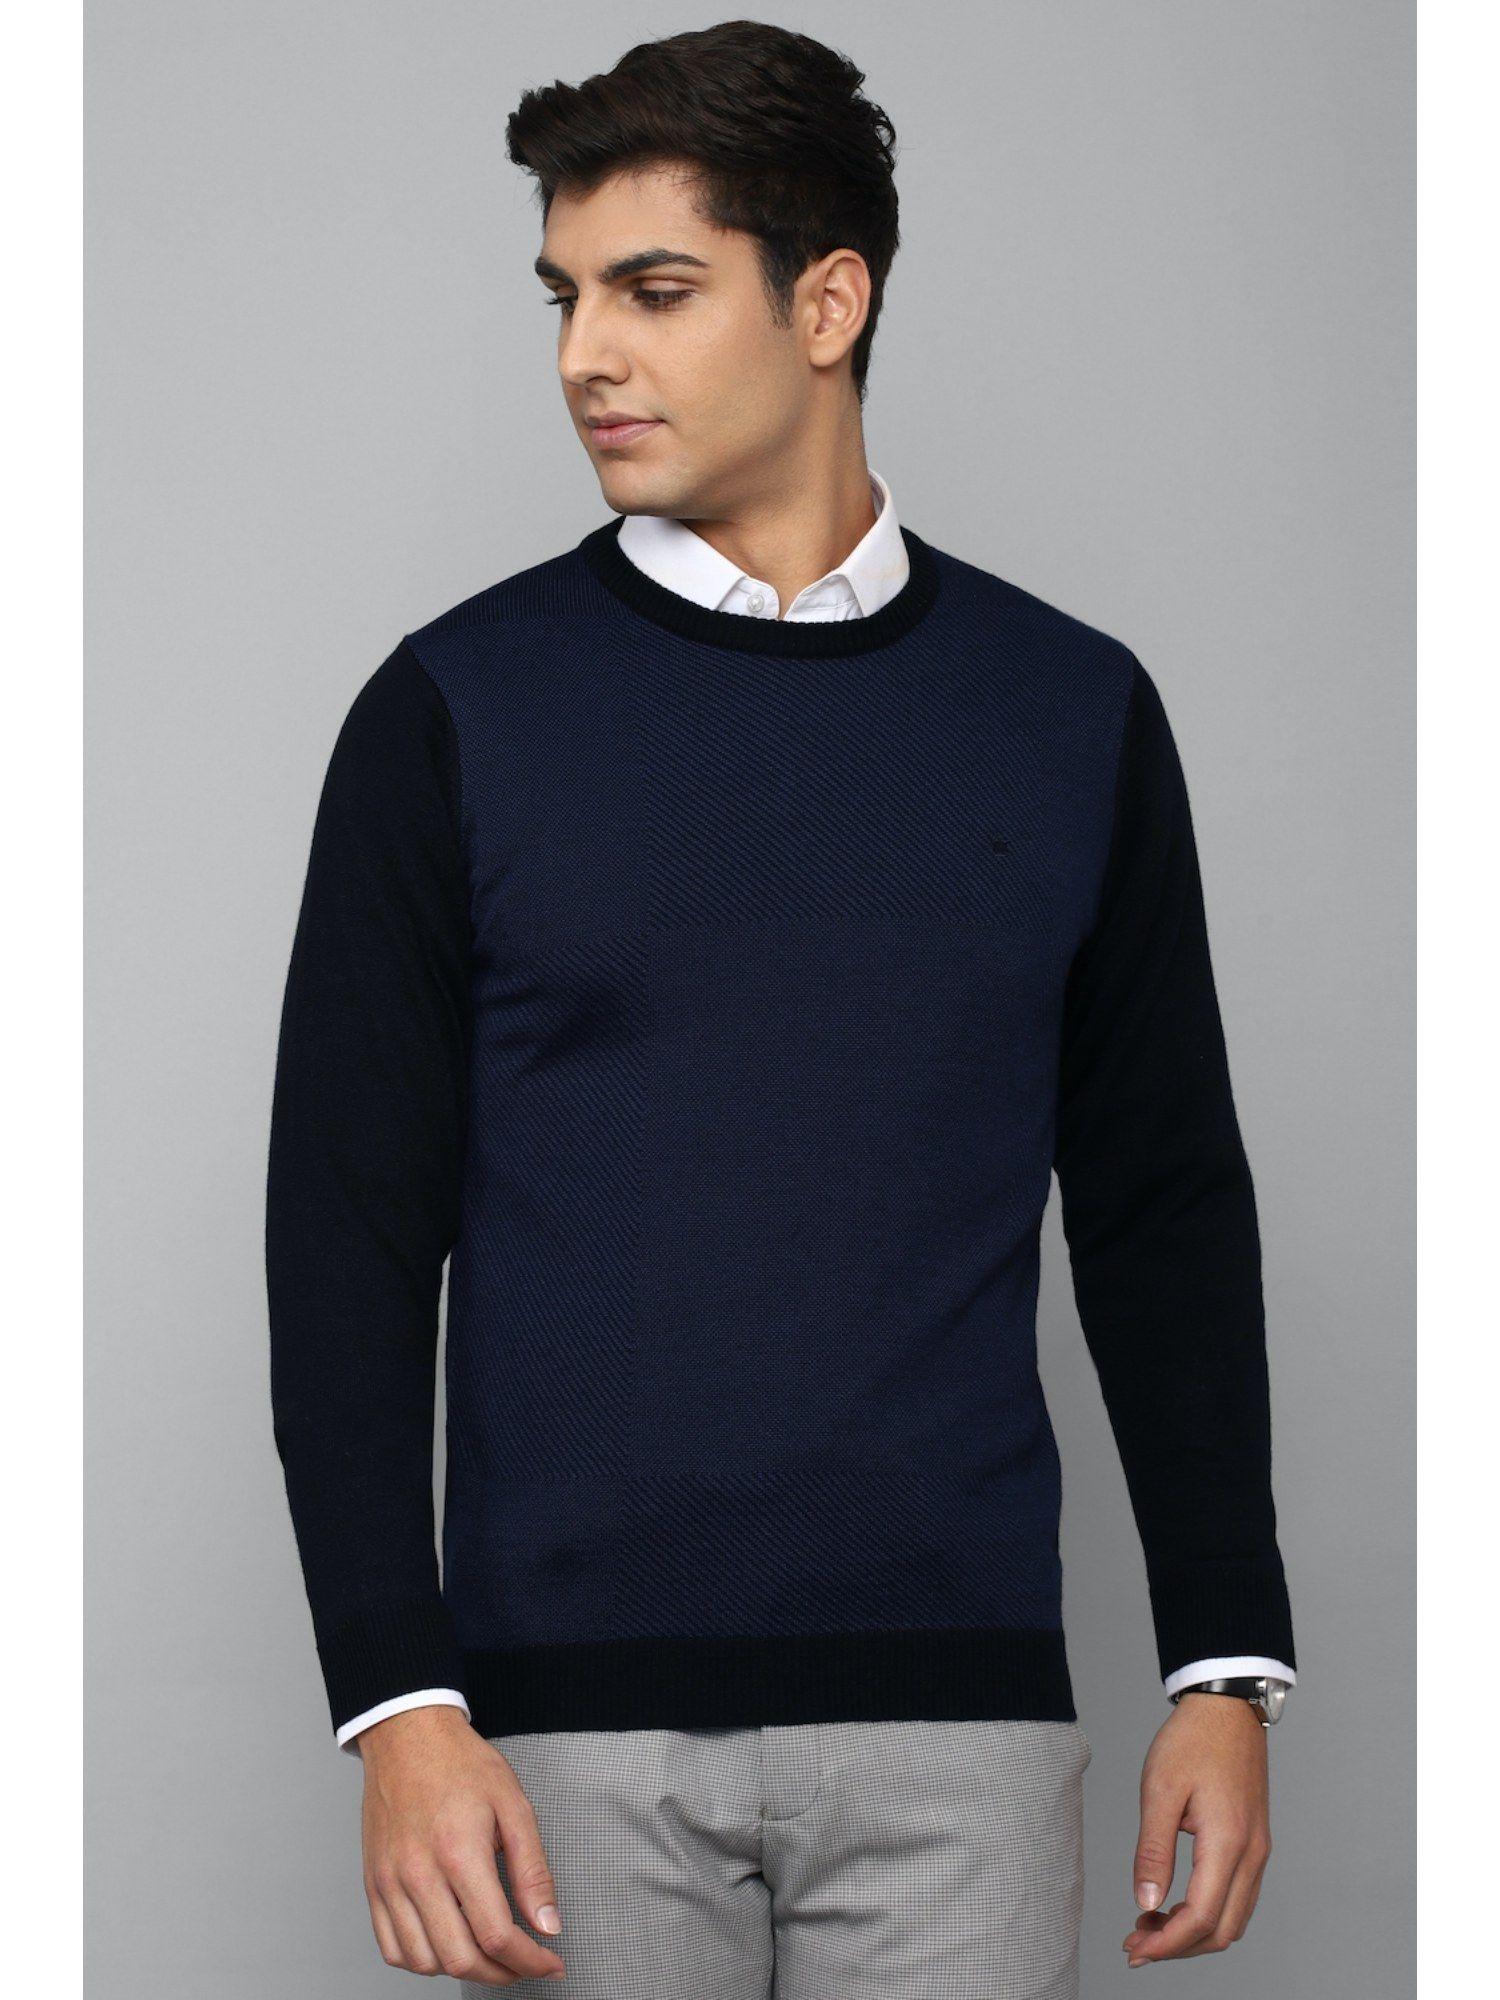 navy-sweater